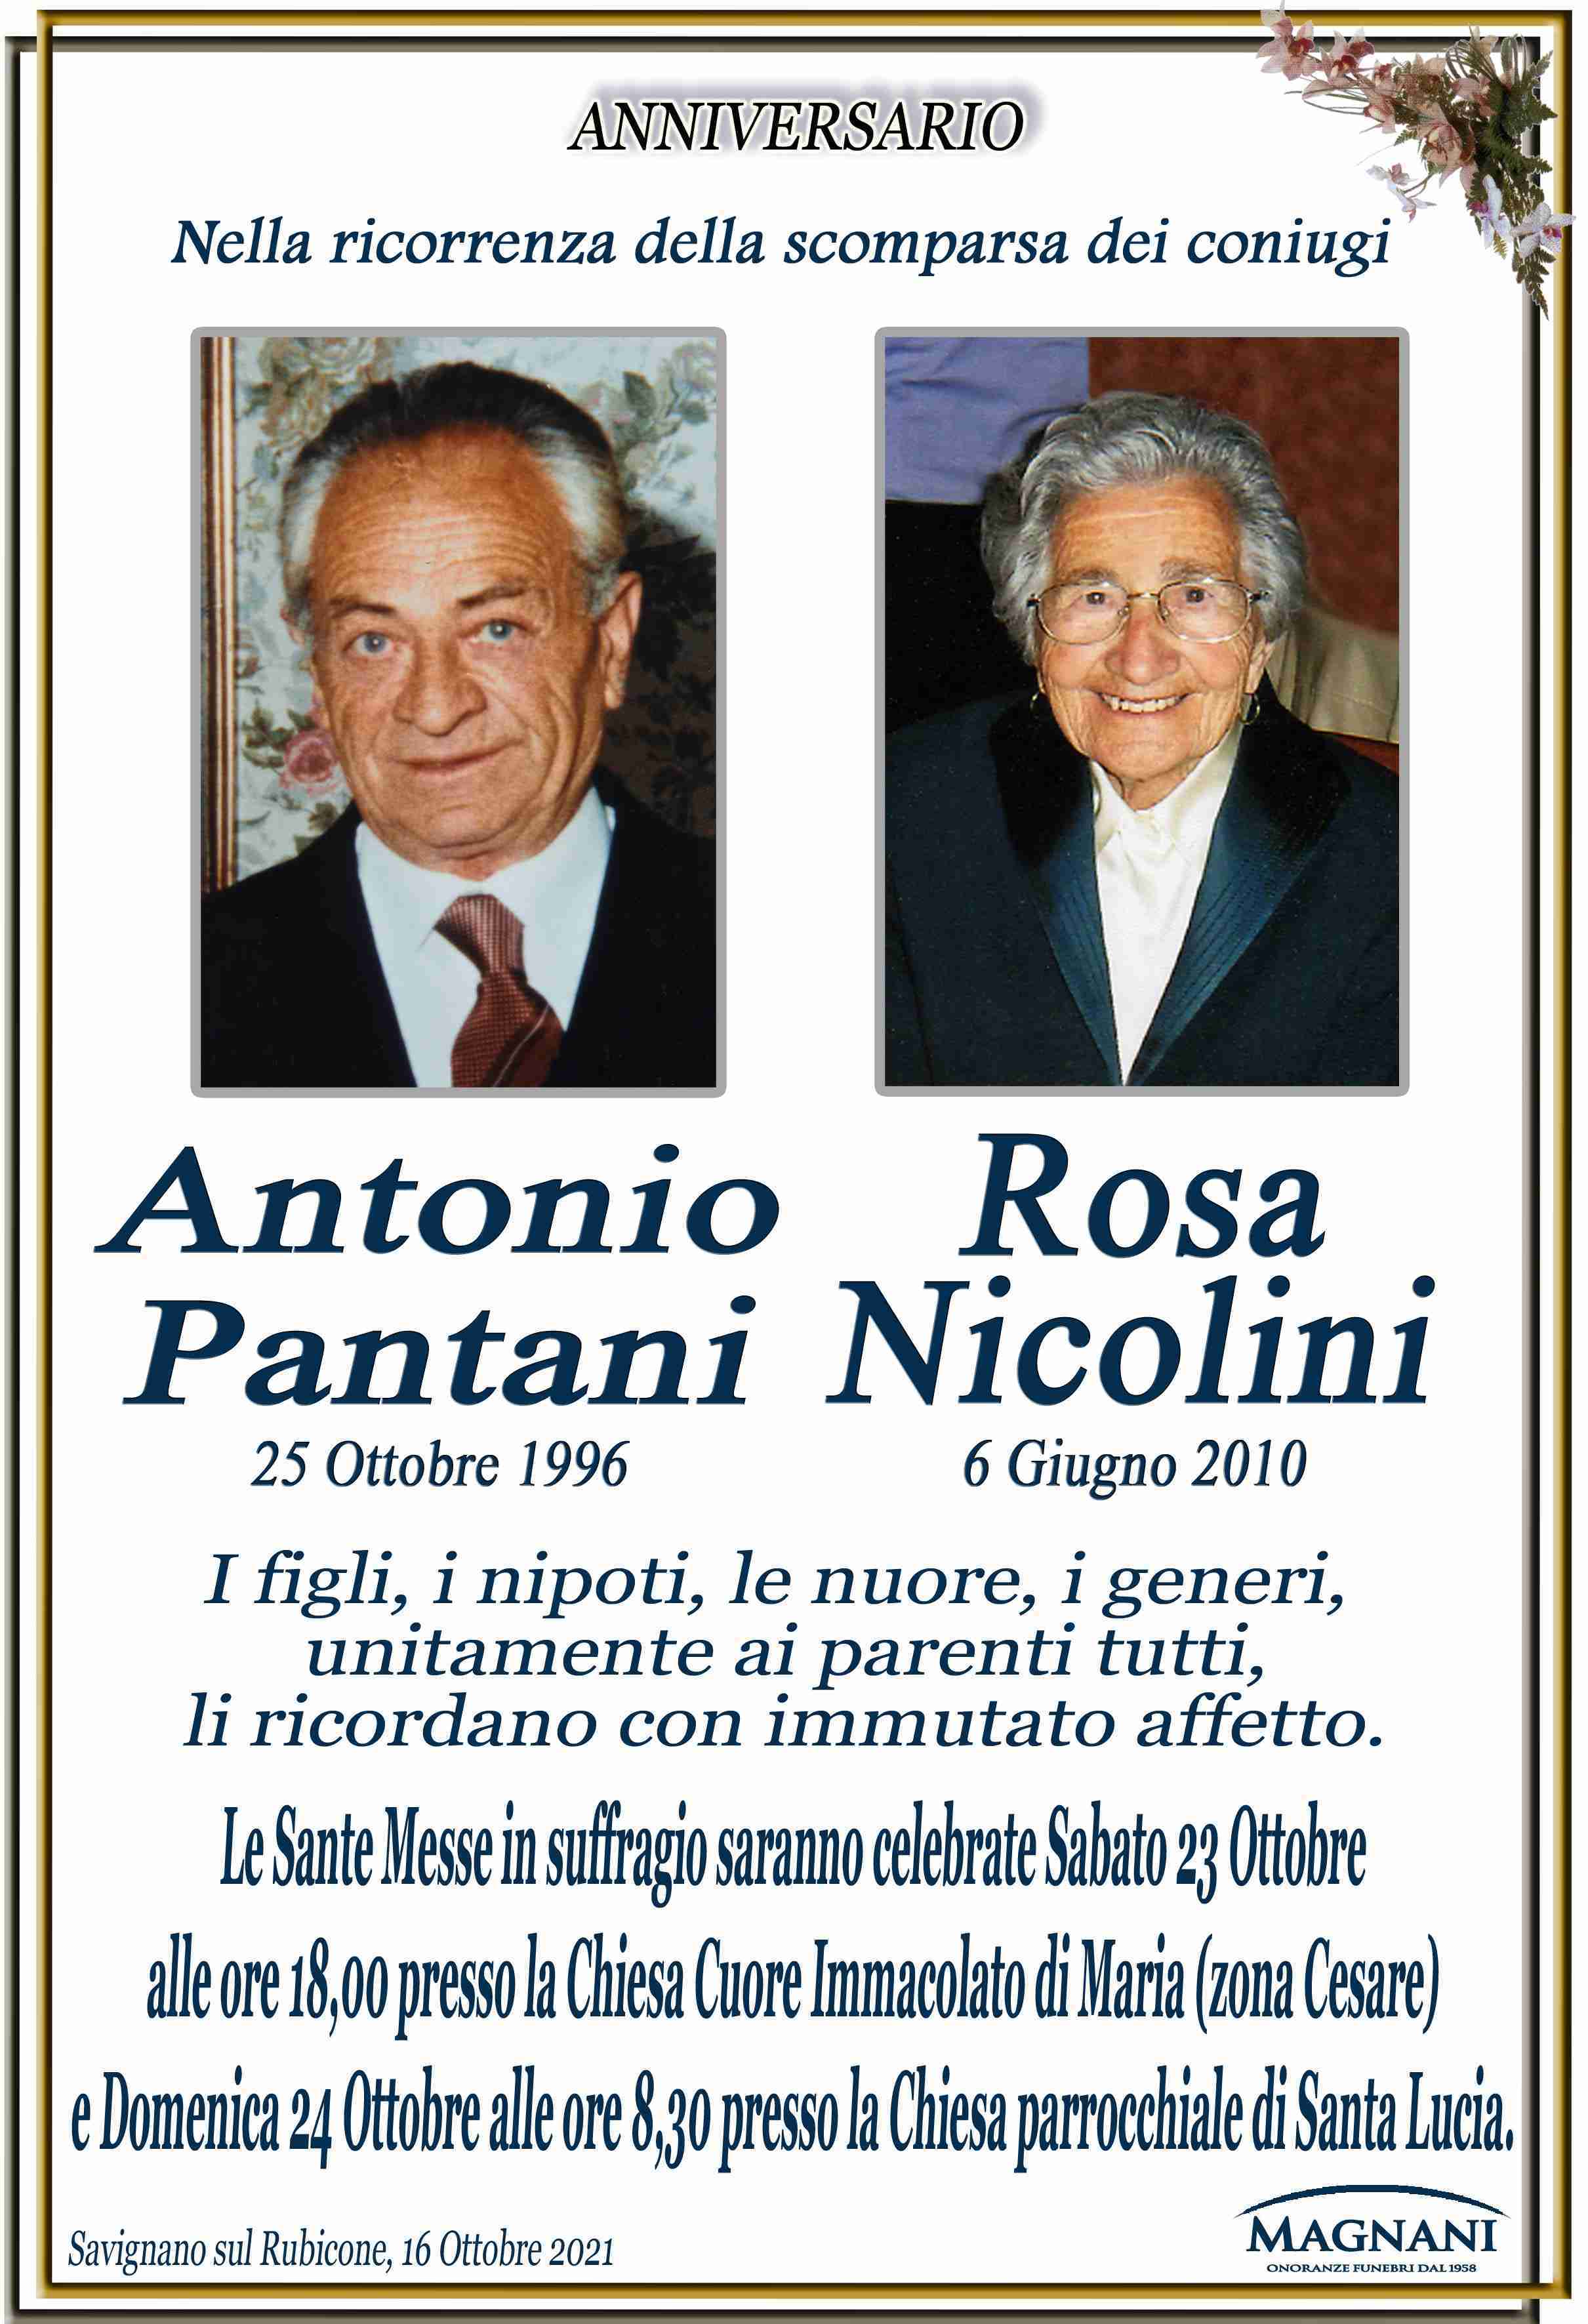 Antonio Pantani e Rosa Nicolini